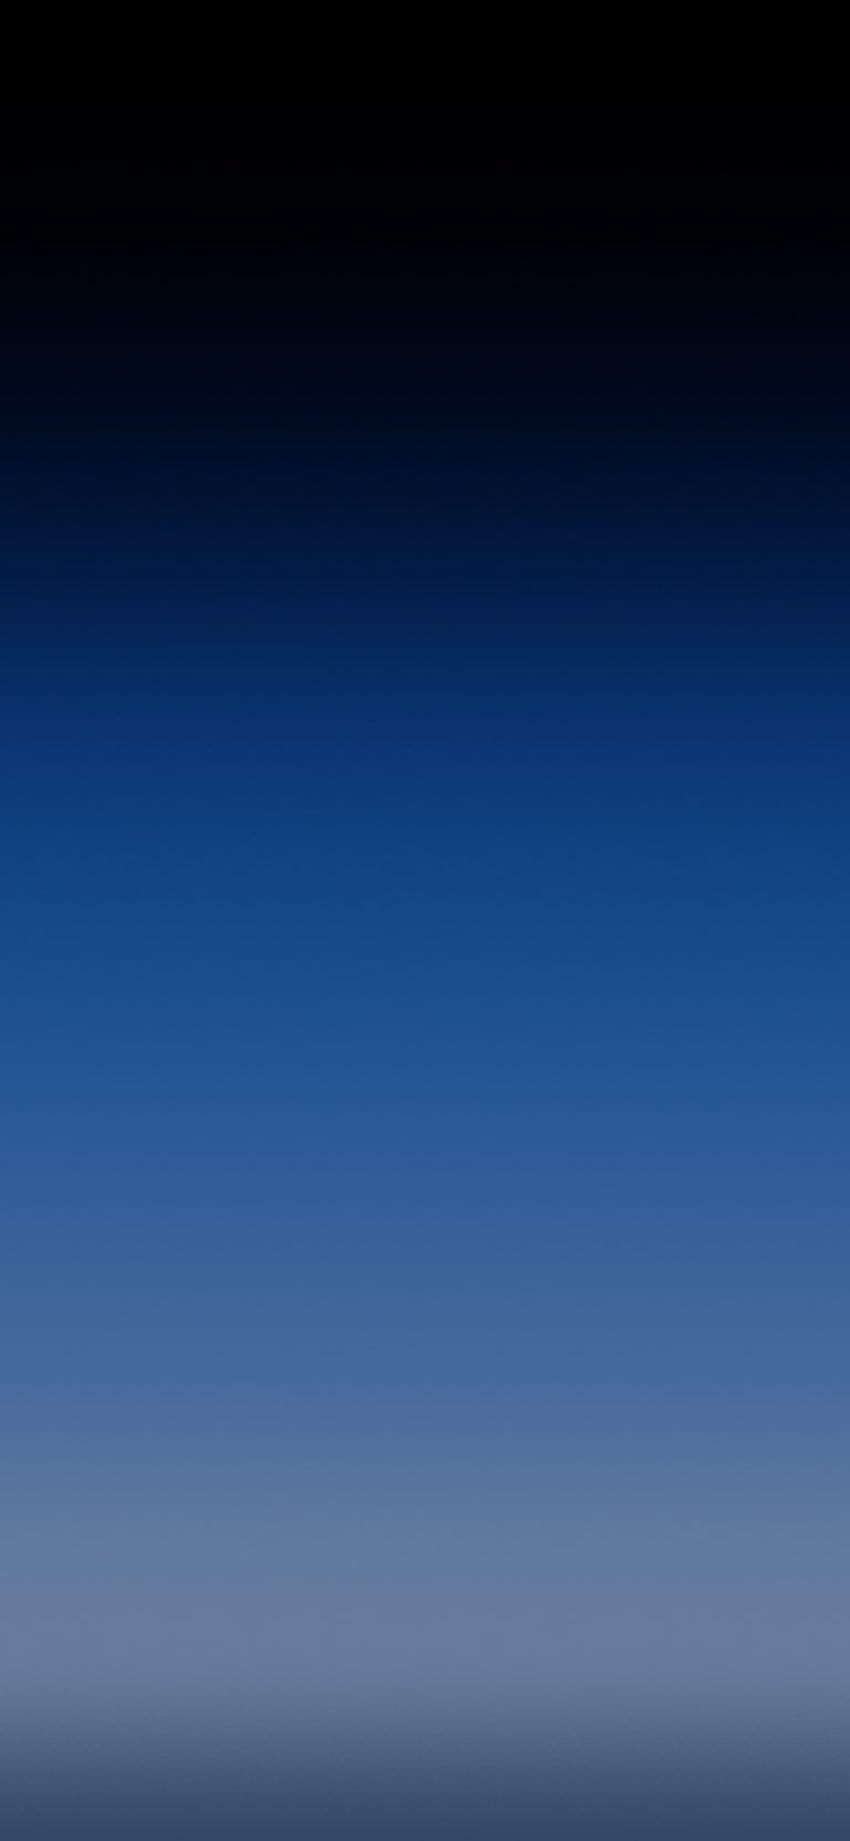 Gradiente mínimo para esconder o entalhe do iPhone X, azul escuro minimalista Papel de parede de celular HD